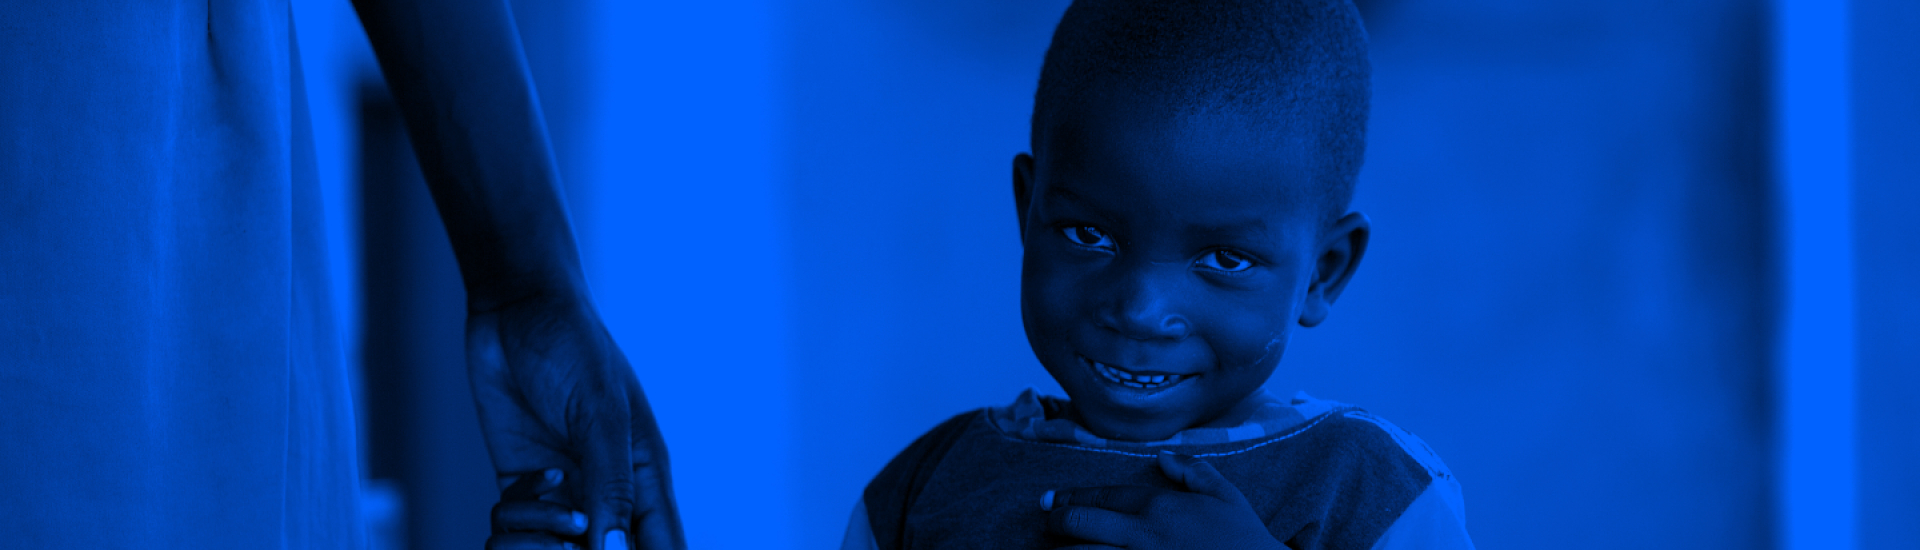 Smiling malaria free child